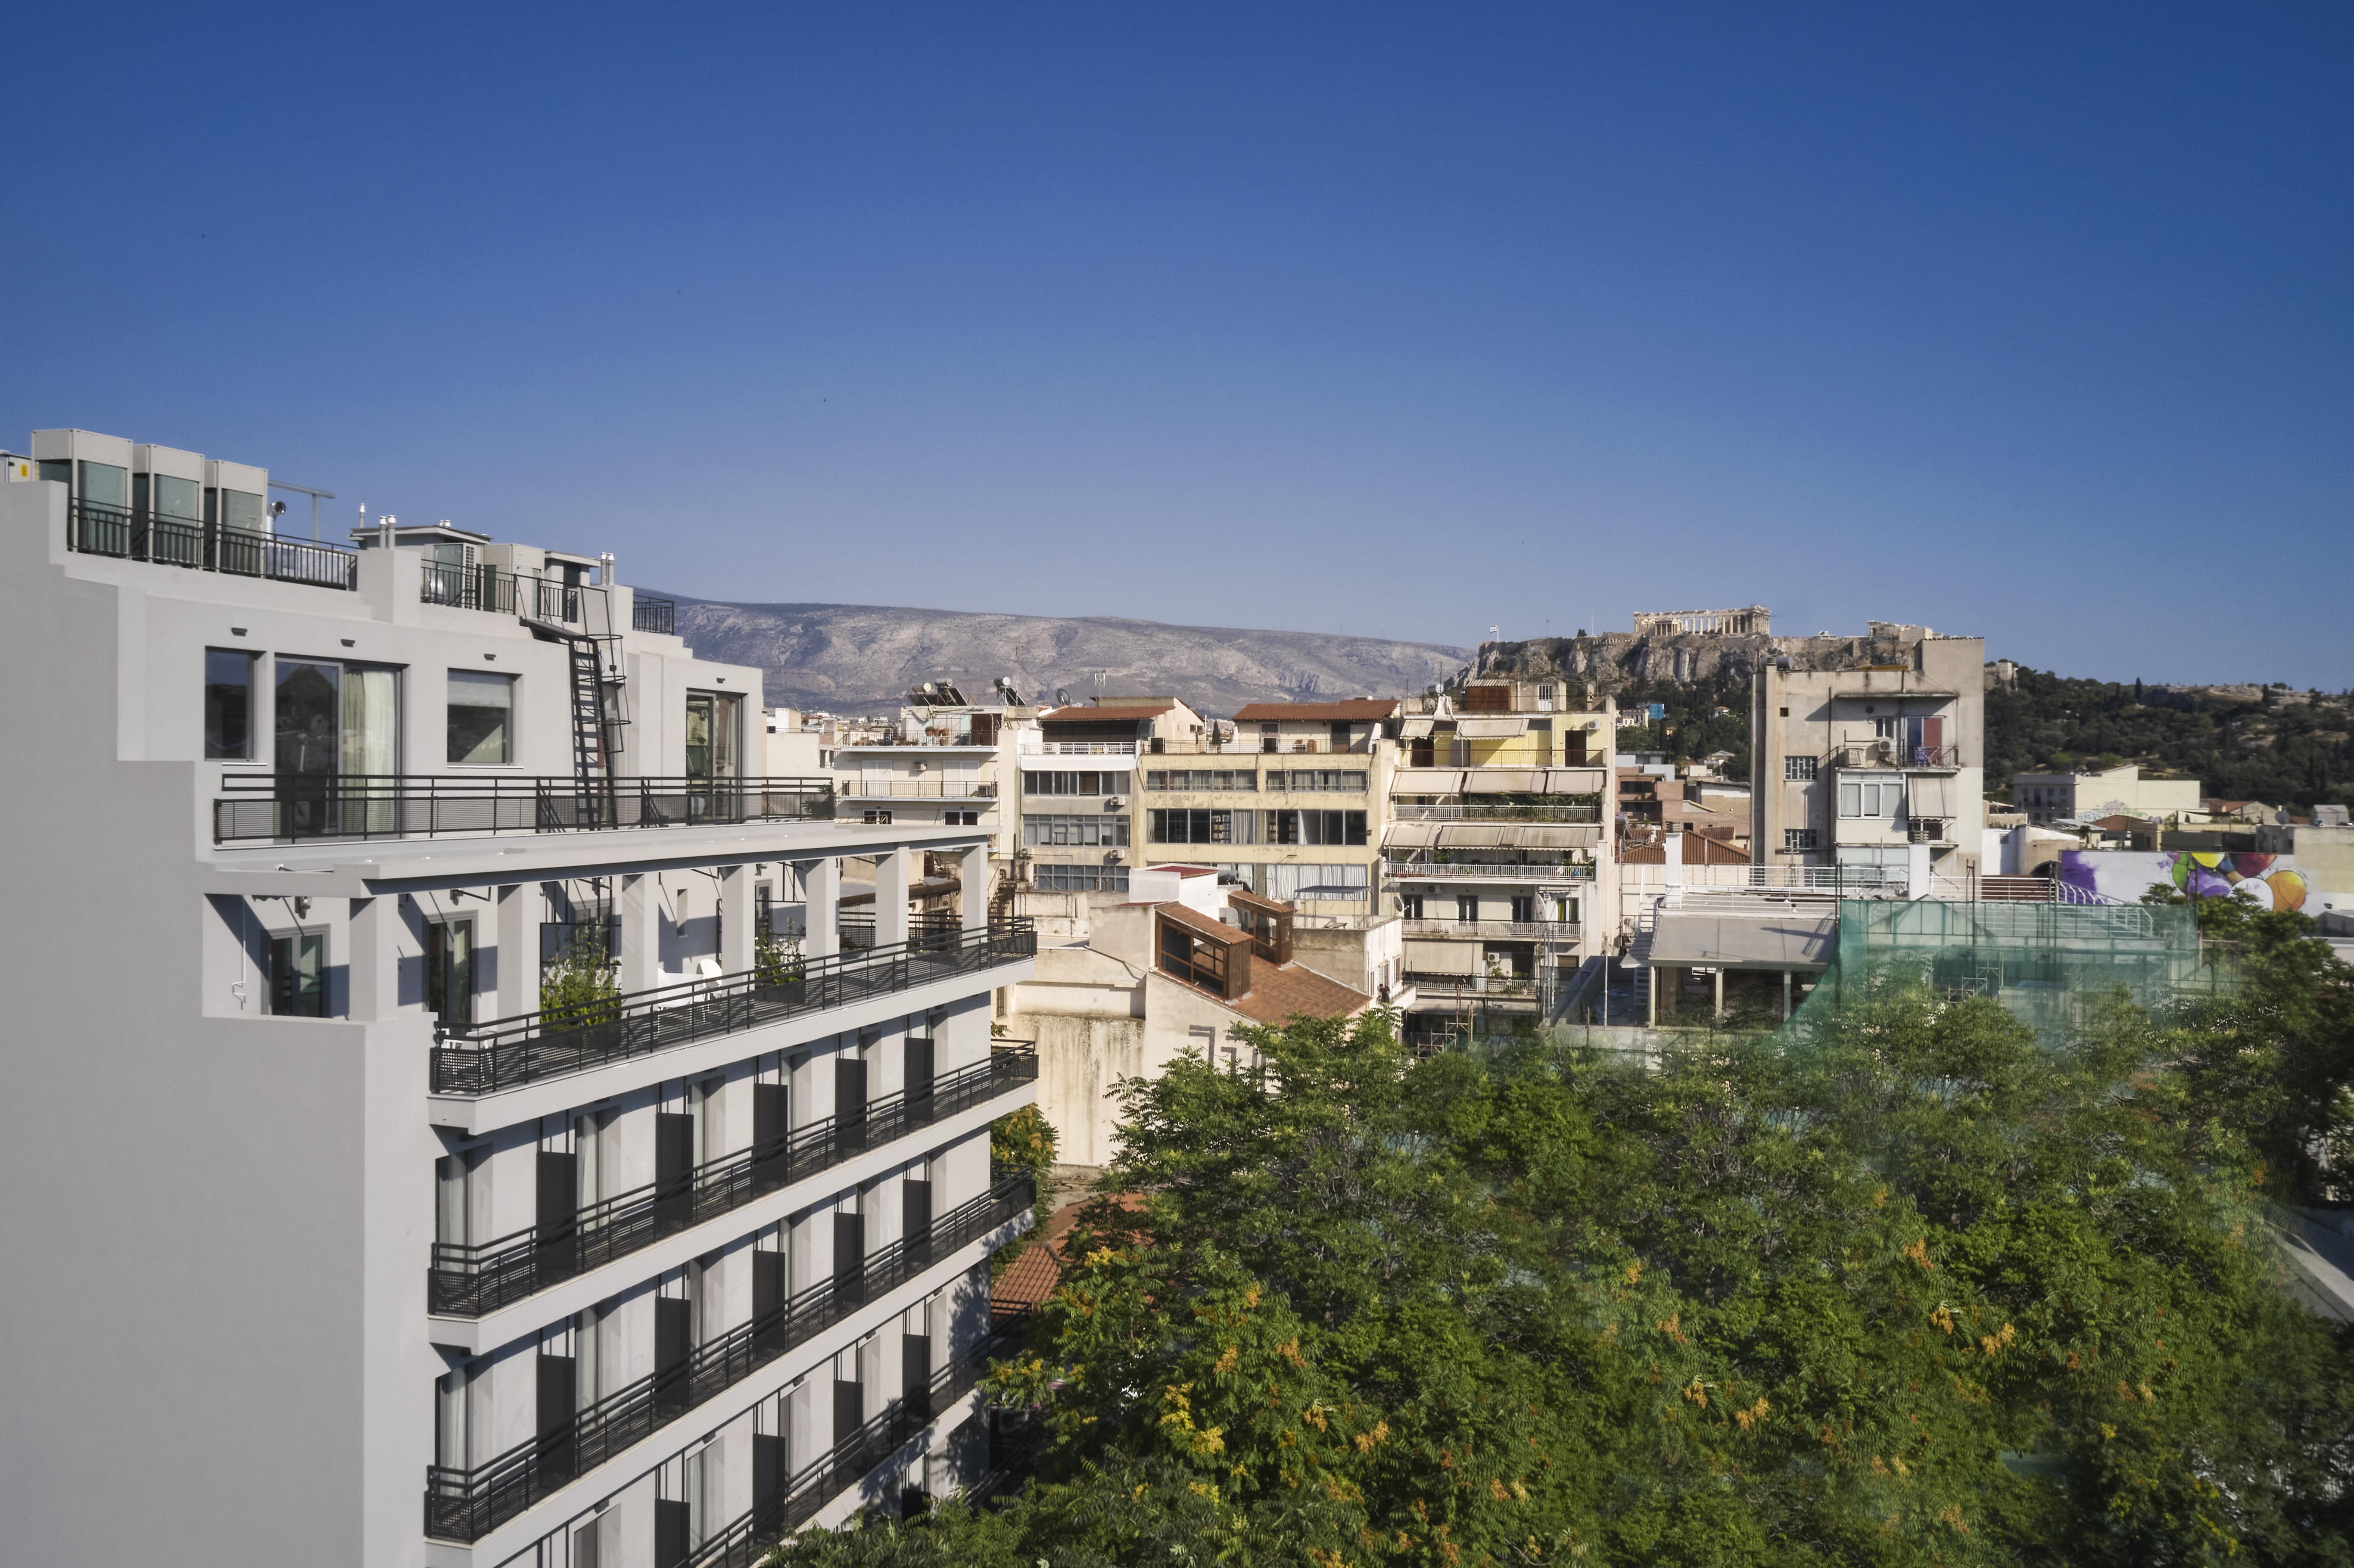 Nlh Kerameikos - Neighborhood Lifestyle Hotels Athens Exterior photo